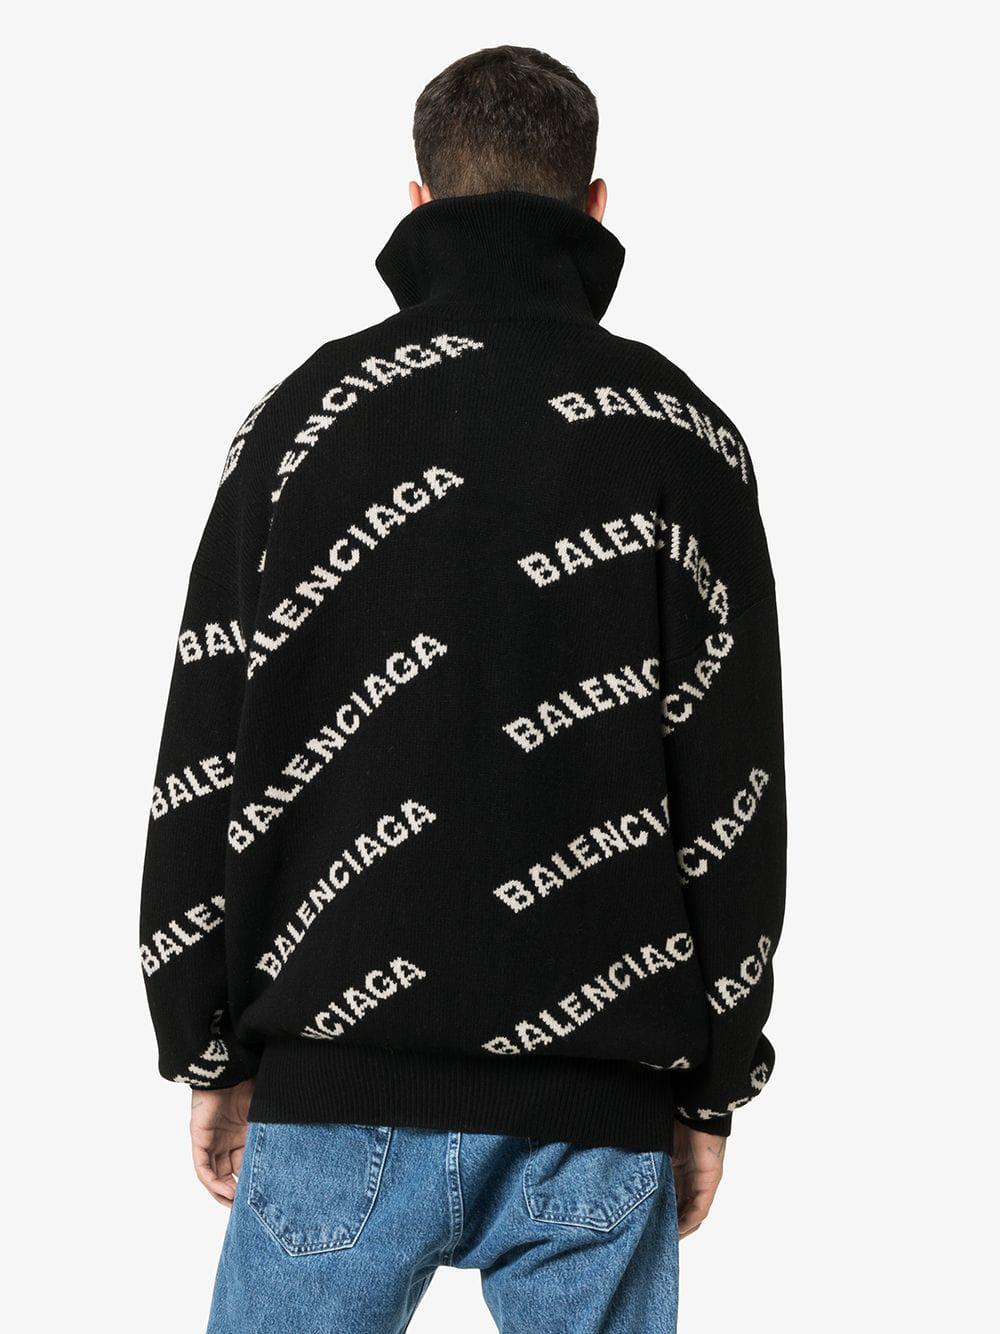 Balenciaga Wool Logo Knit Zipped Jumper in Black for Men - Lyst